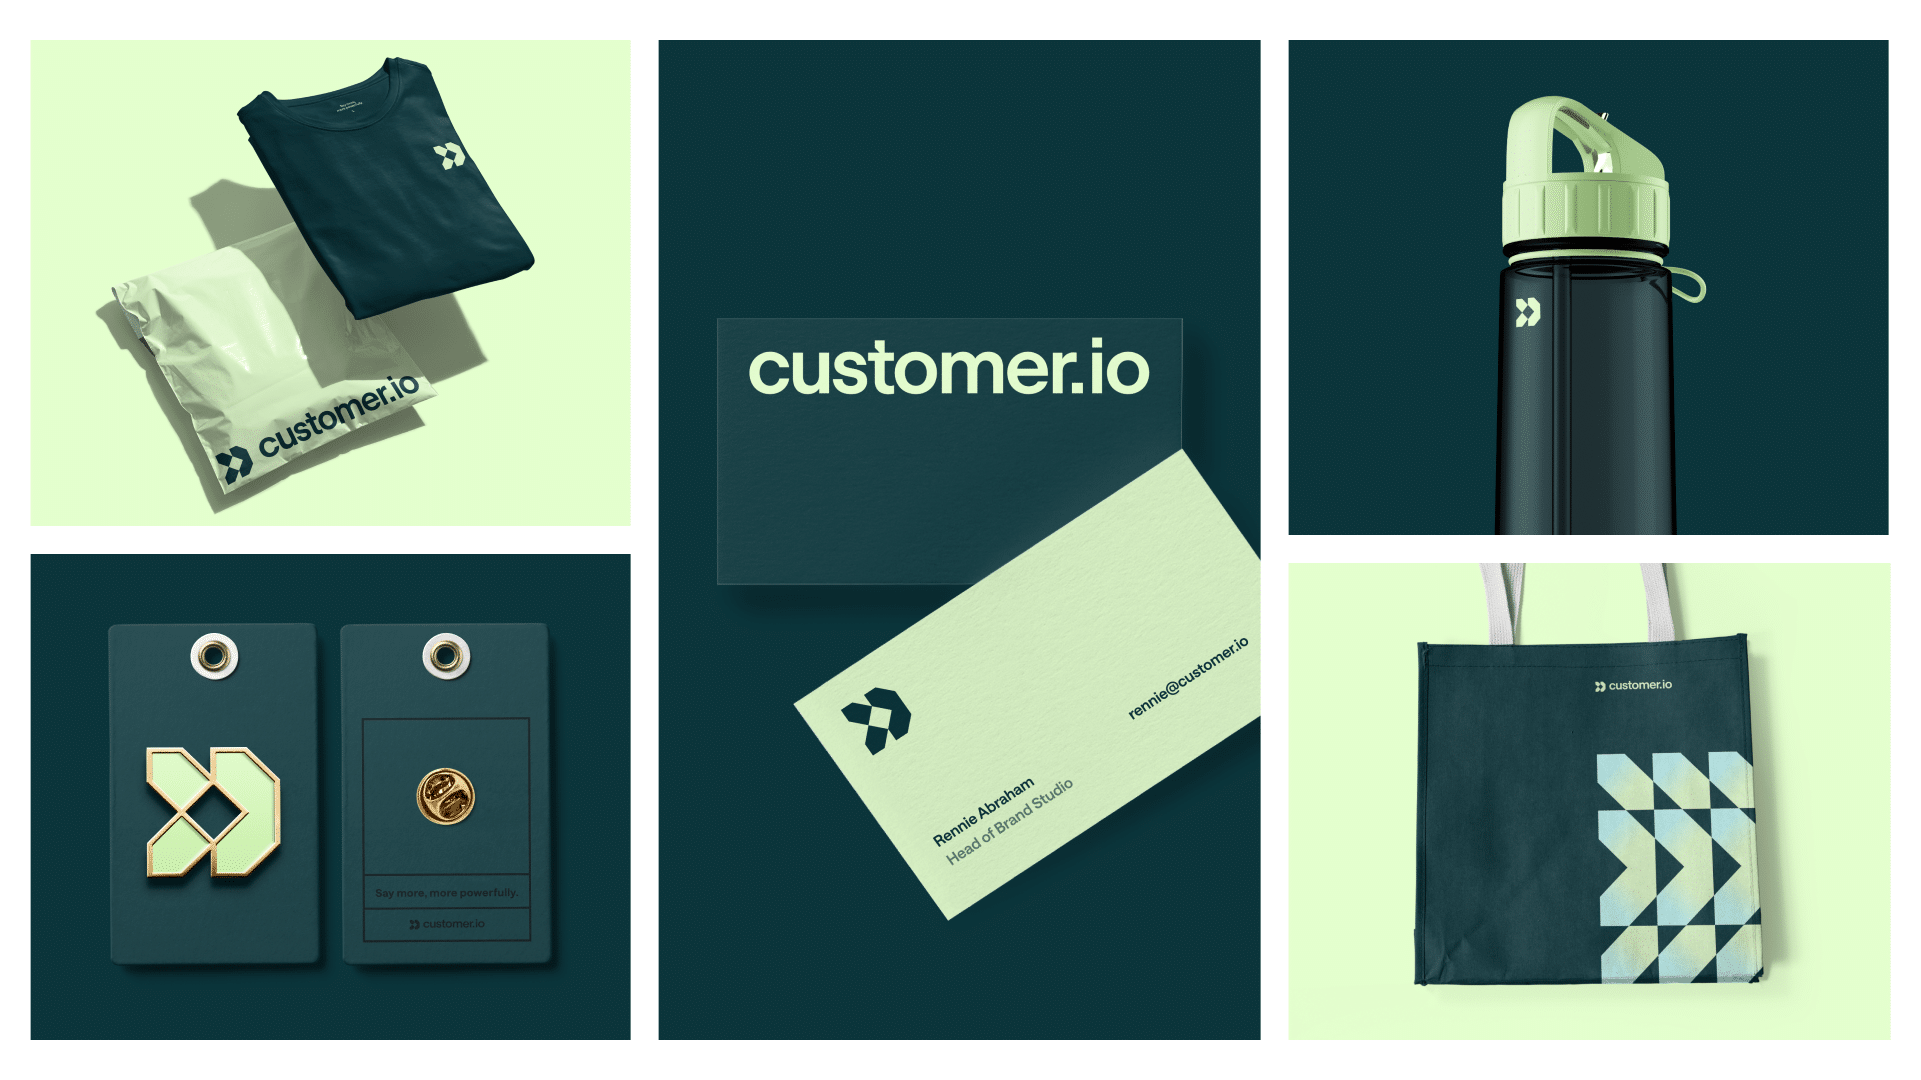 Customer.io new logo application